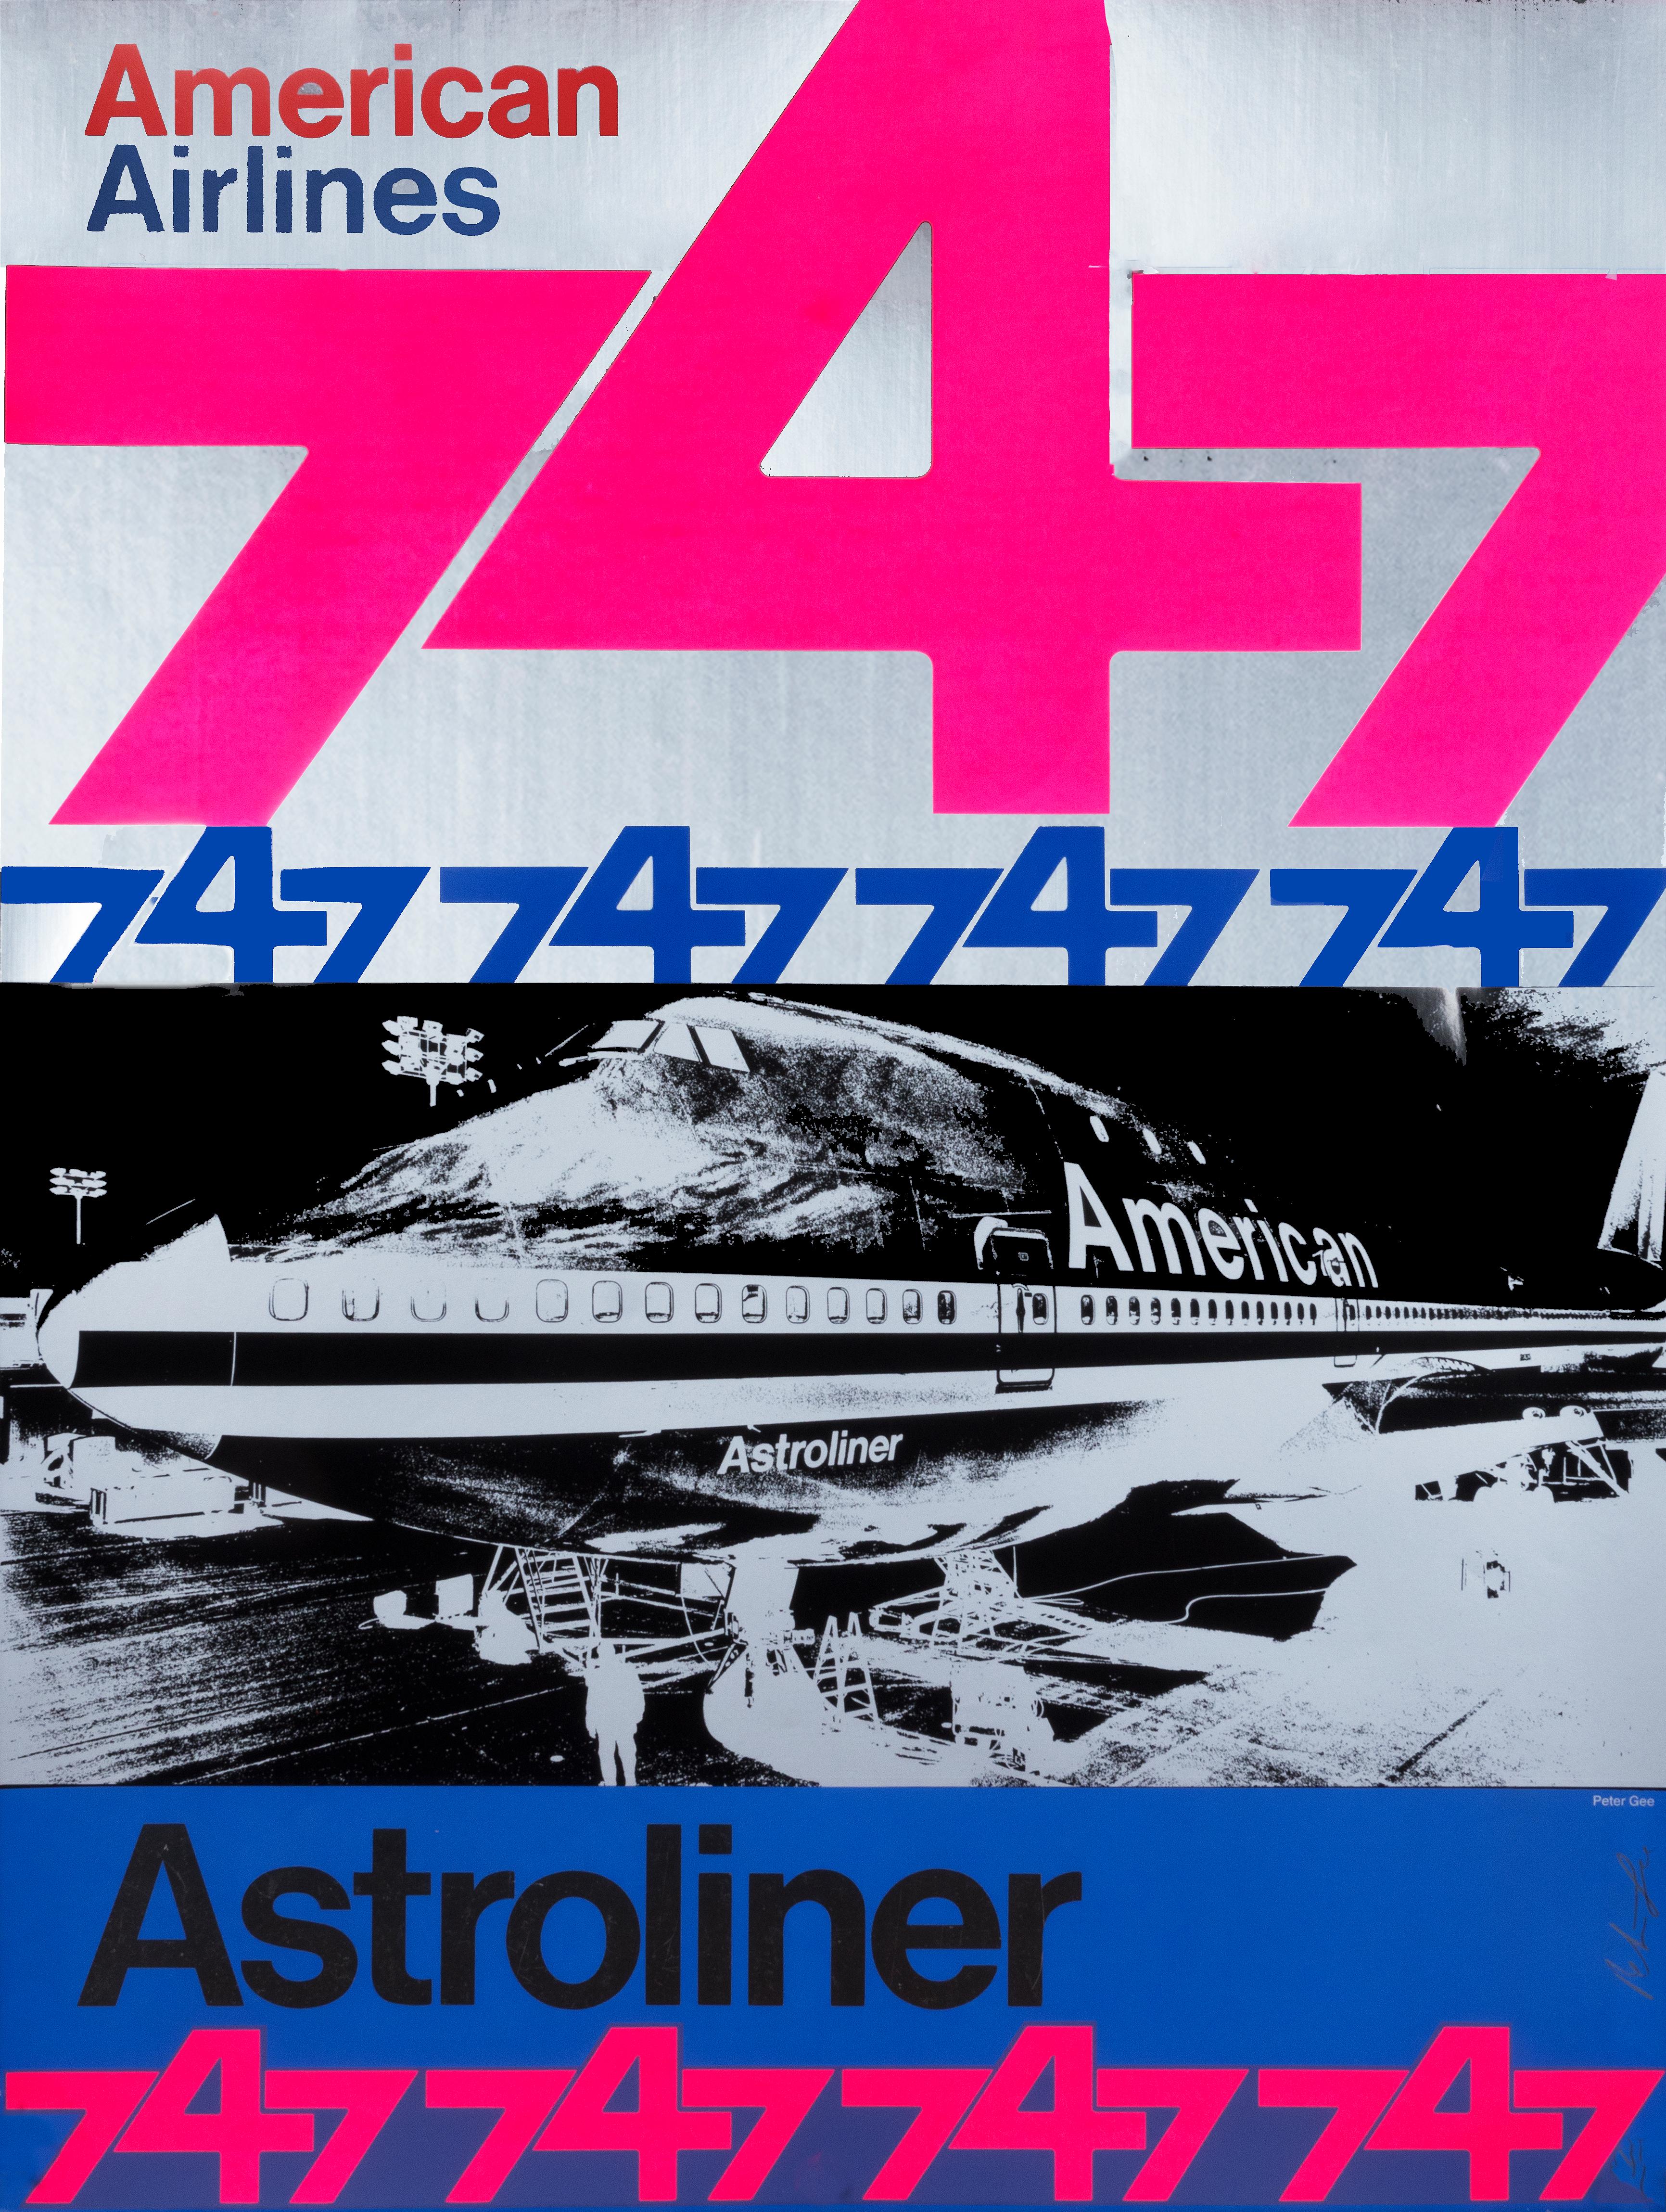 "American Airlines 747 Astroliner (handsigned)" Original Vintage Aviation Poster - Print by Peter Gee